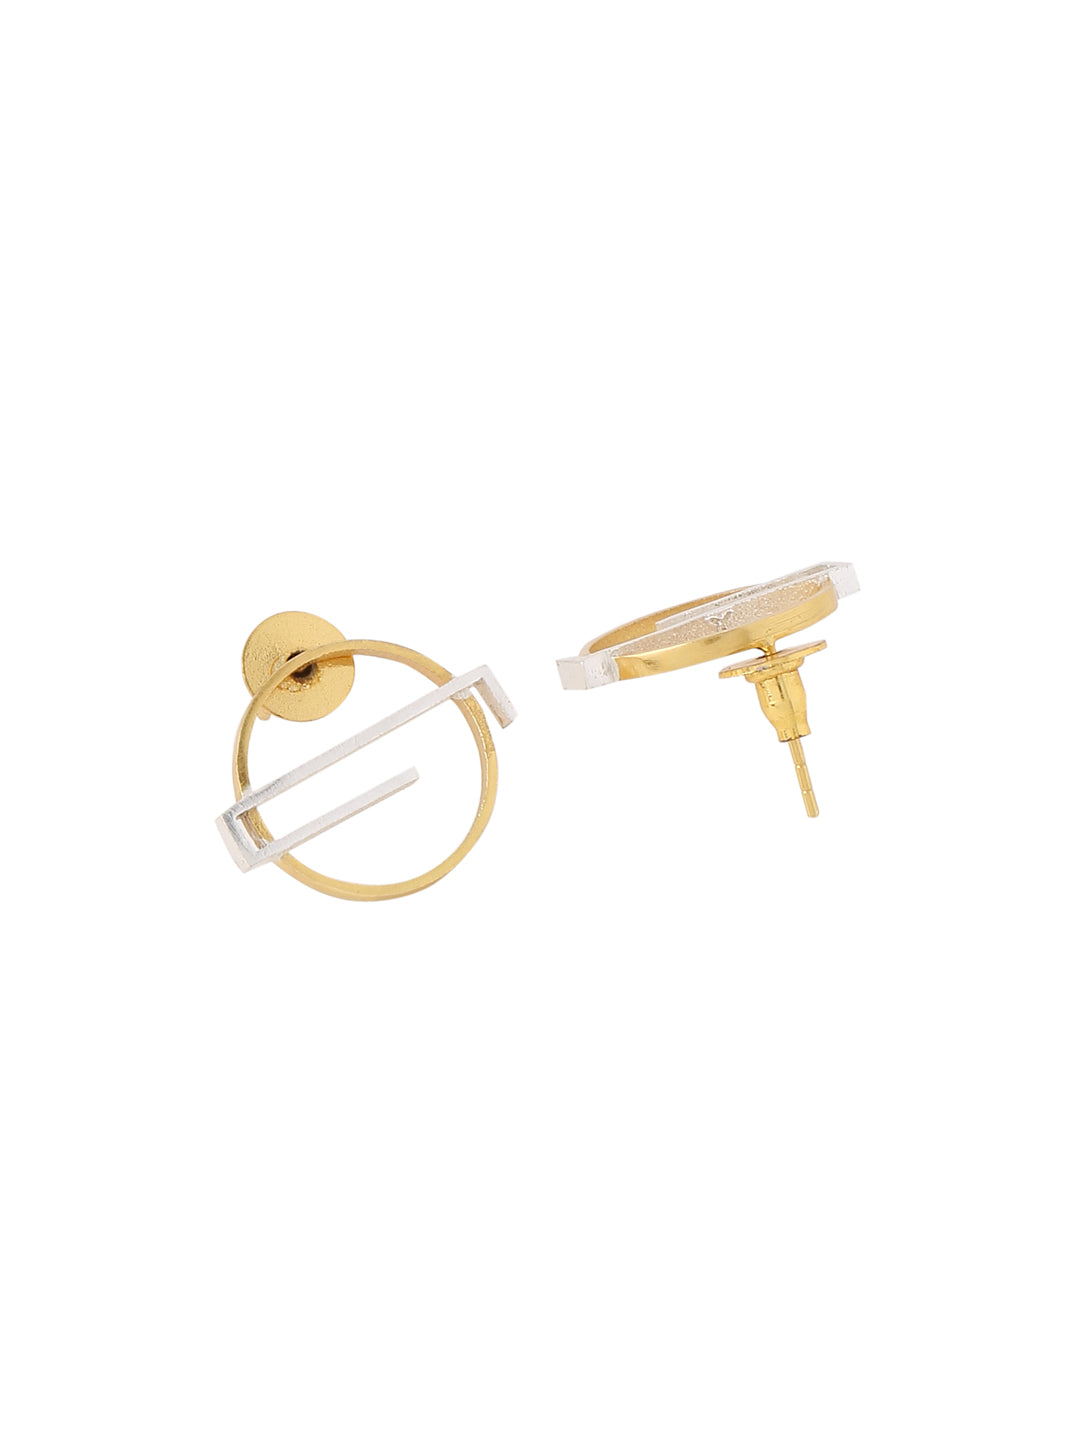 Curio Earrings - Gold/Silver